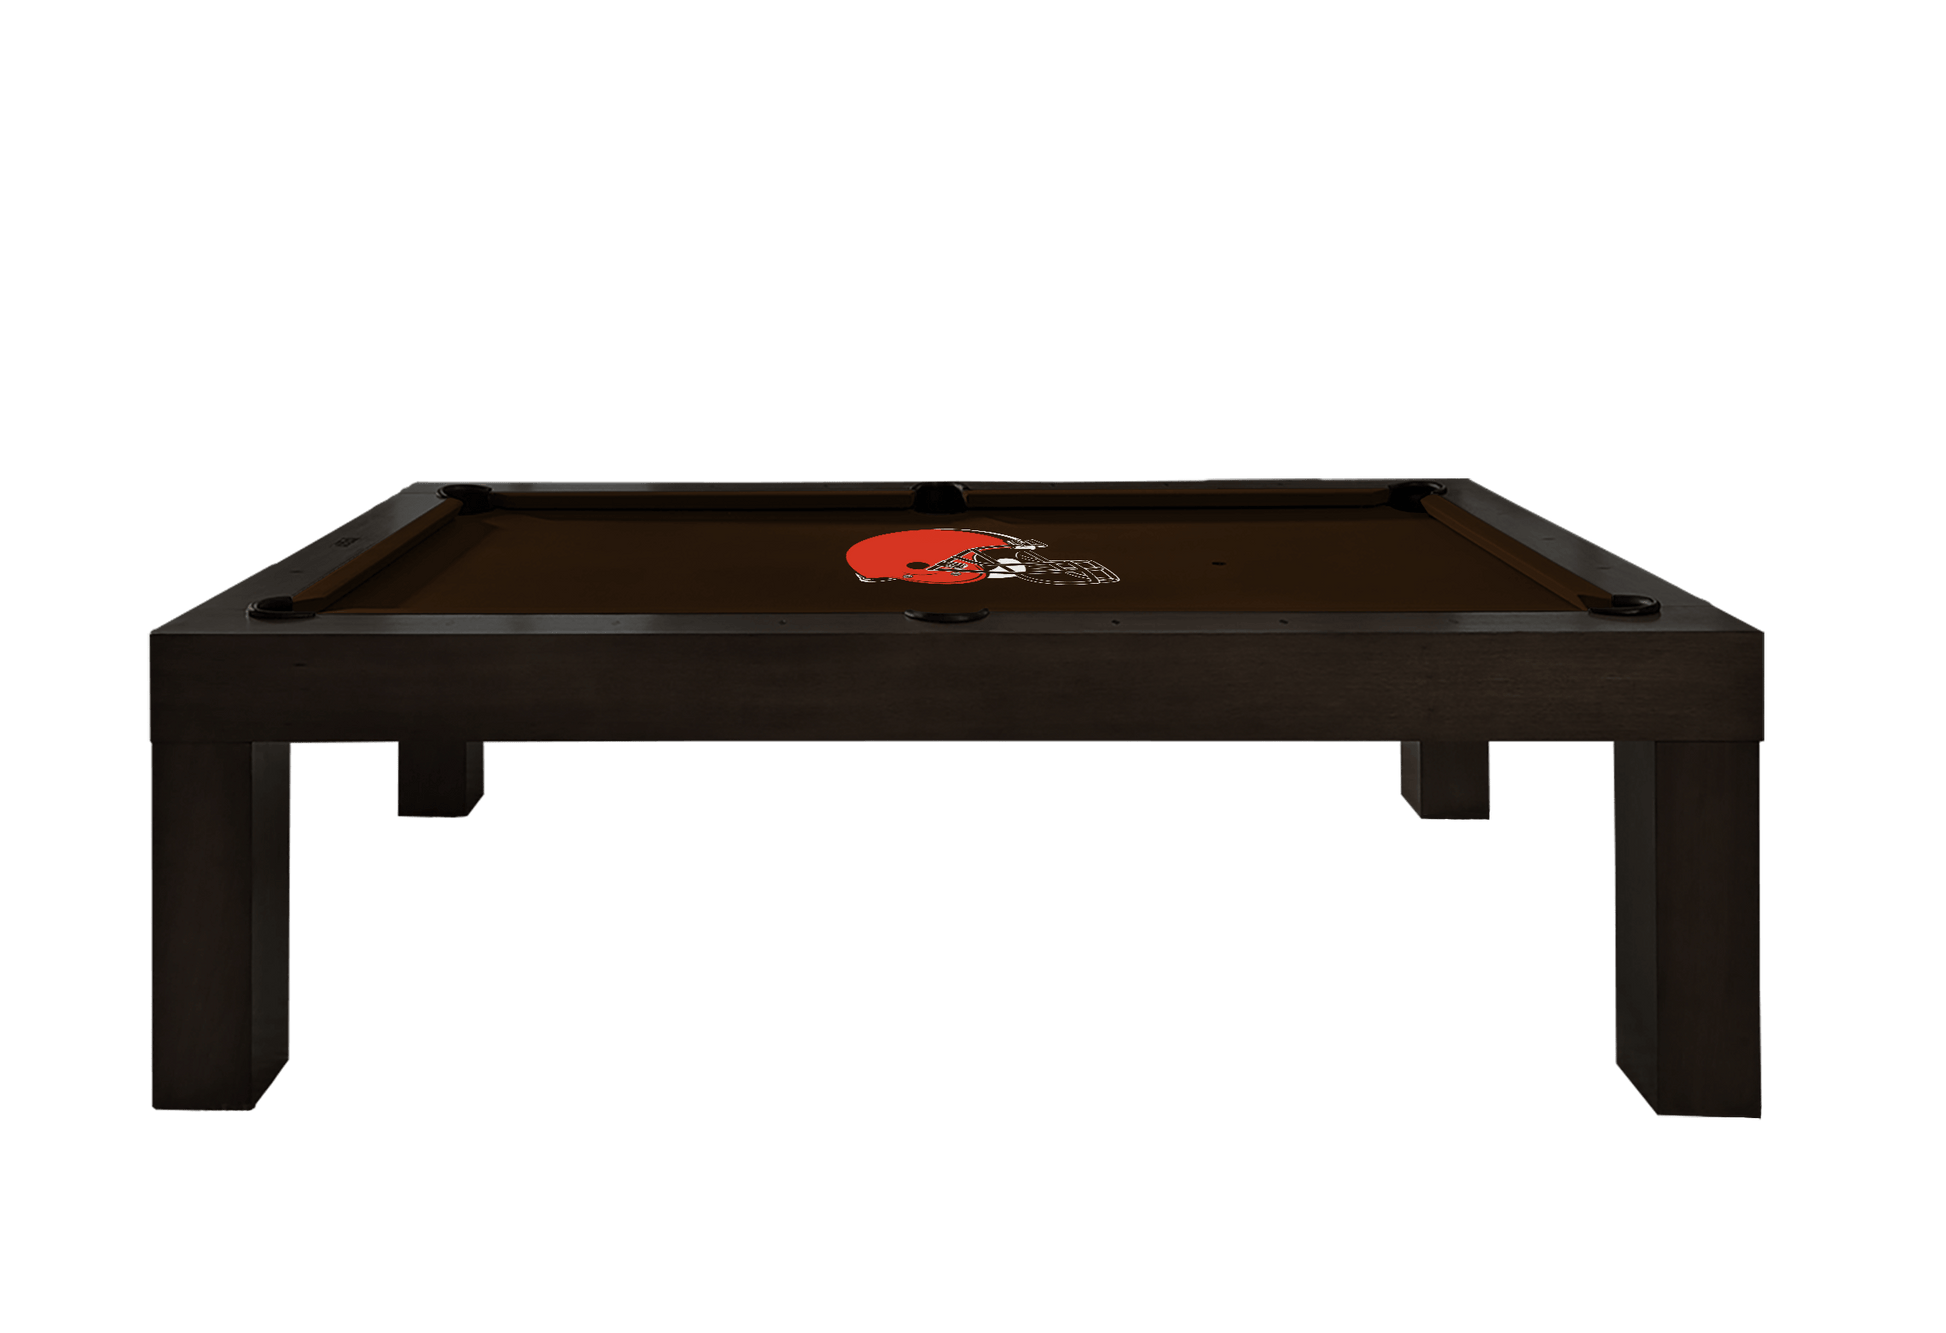 Cleveland Browns Premium Pool Table Bundle - Black Ash Pool Bundle Home Arcade Games   